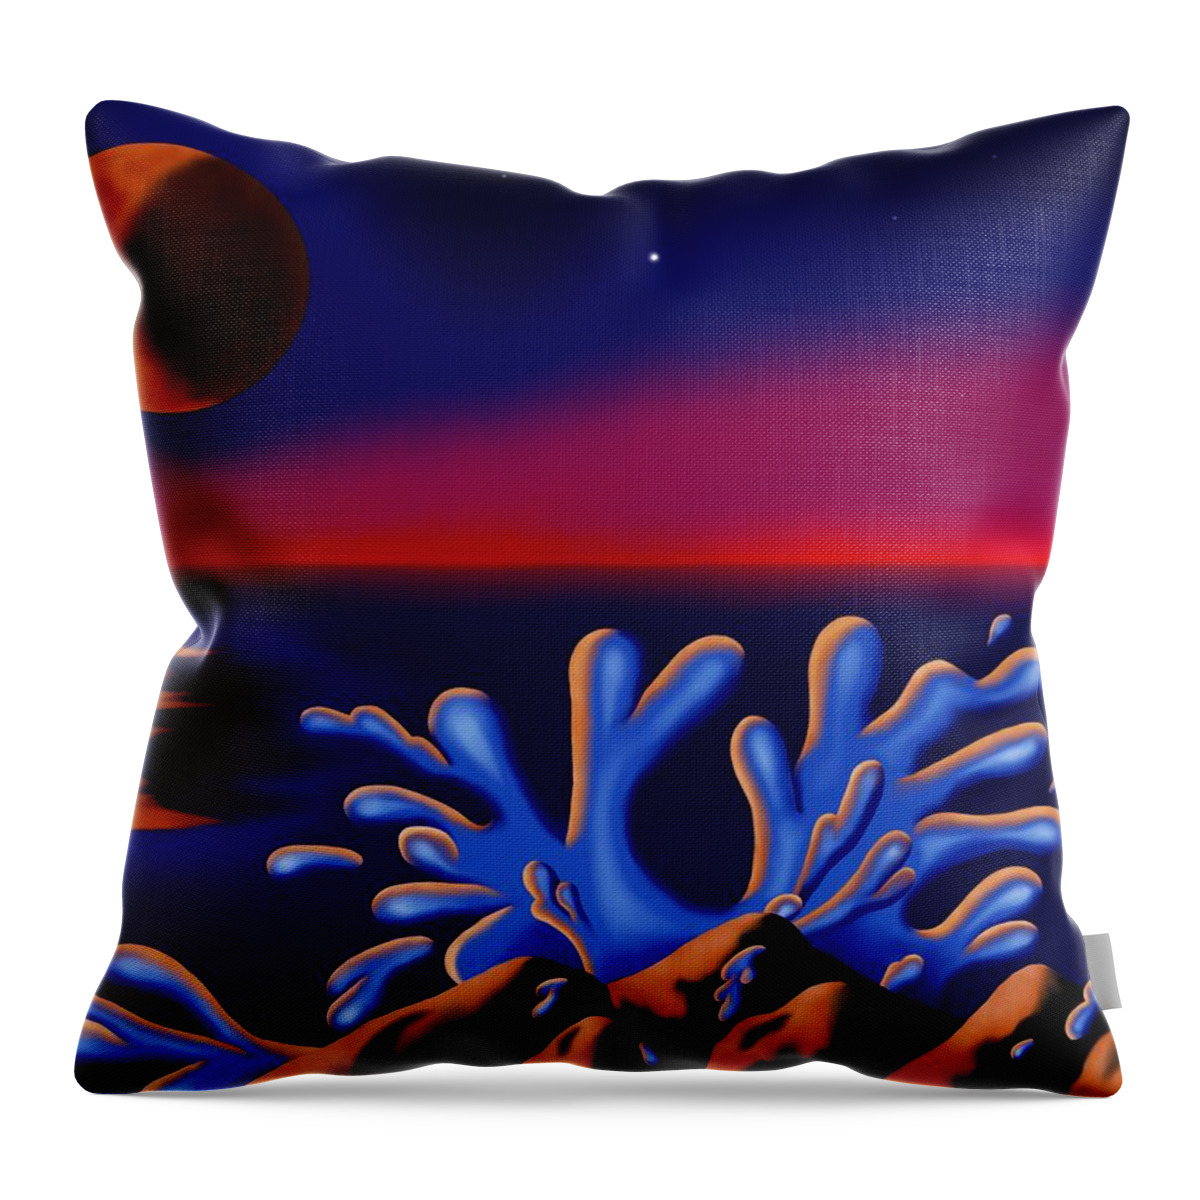 Surrealism Throw Pillow featuring the digital art Moon-glow II by Robert Morin